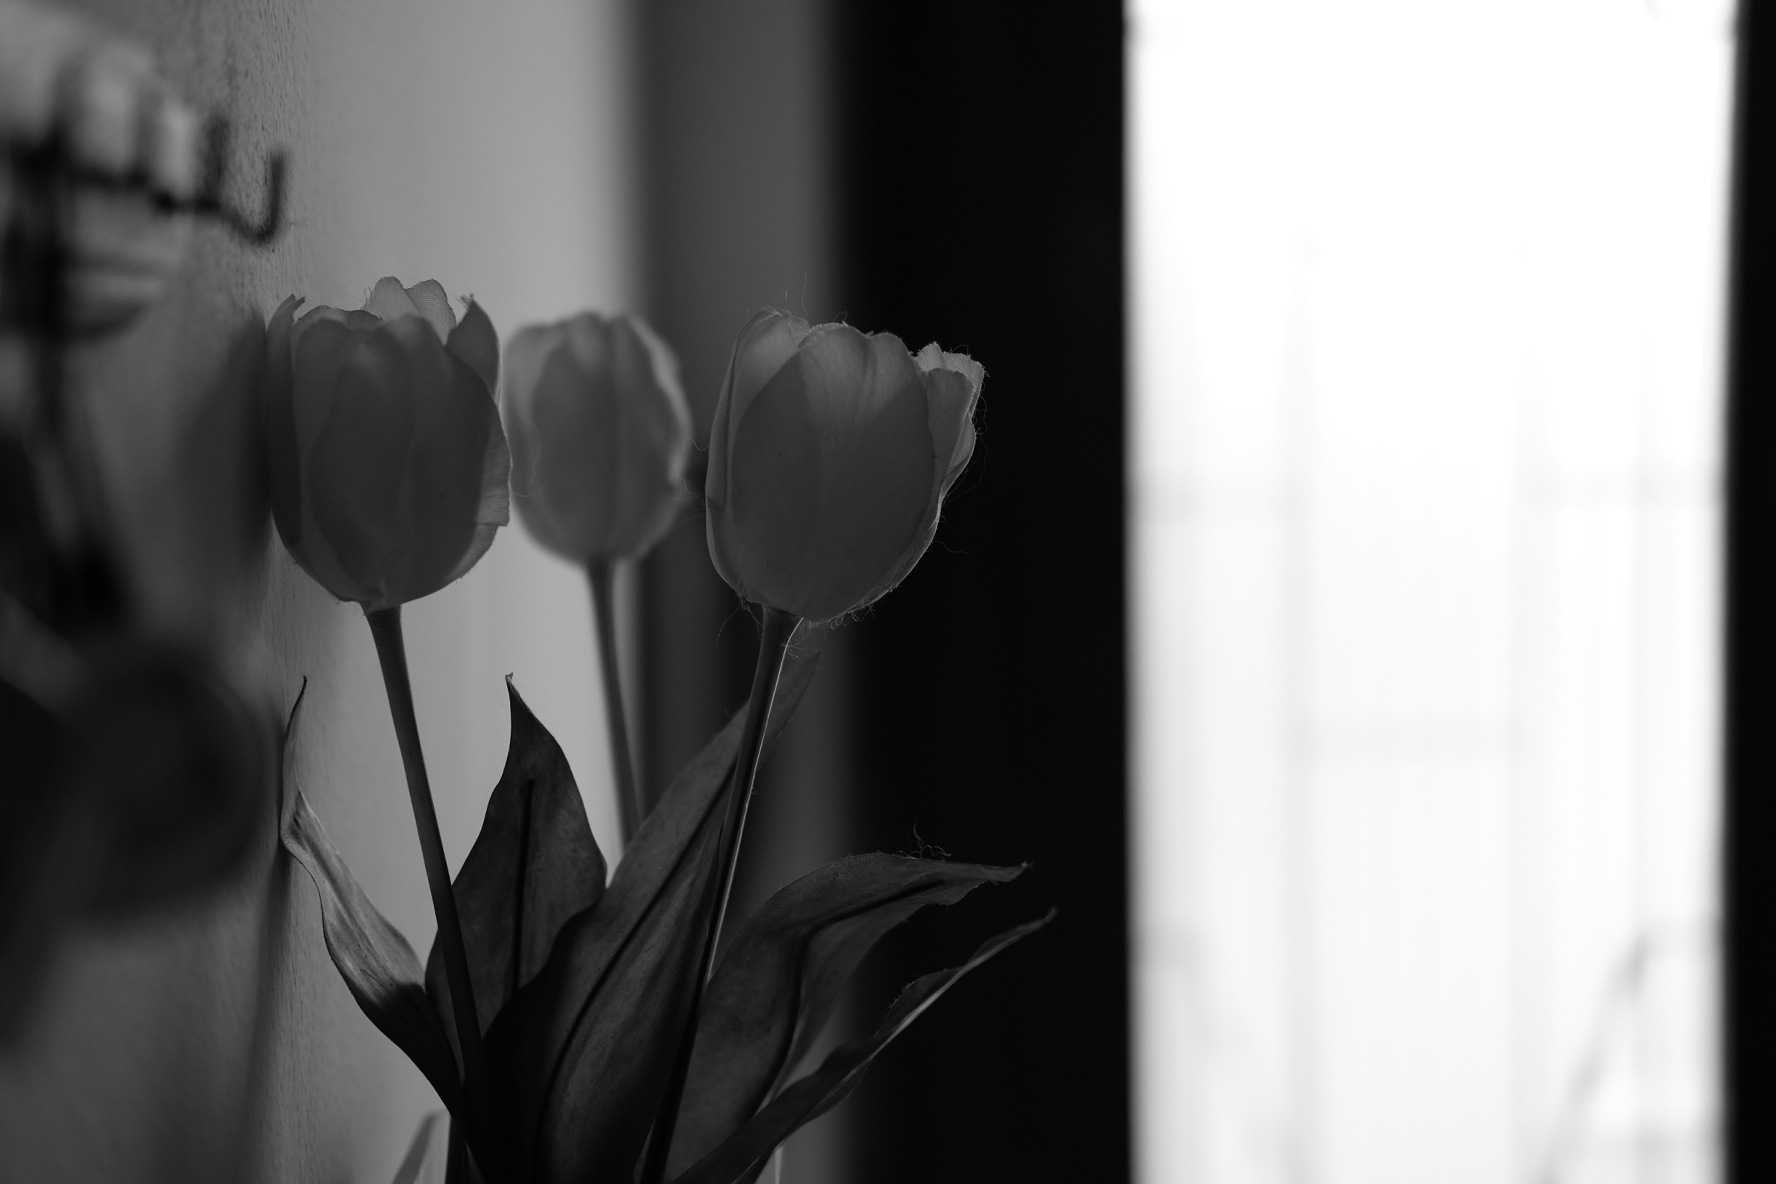 tulips...